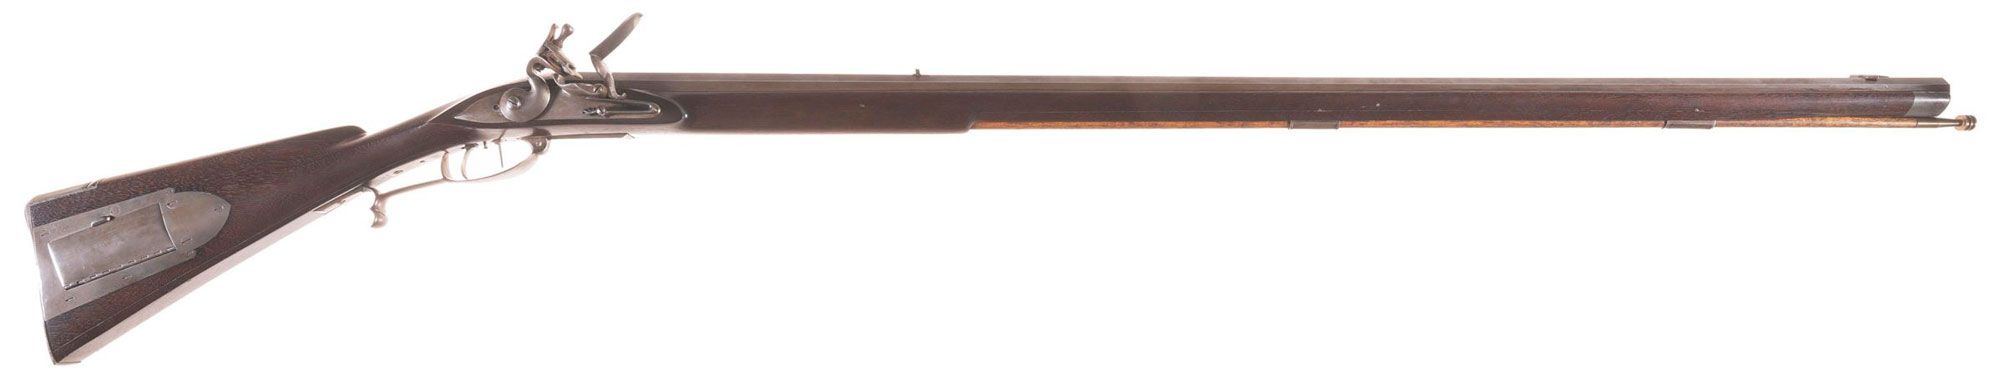 Lot 4194: Dick Bingham Contemporary Flintlock American Long Rifle